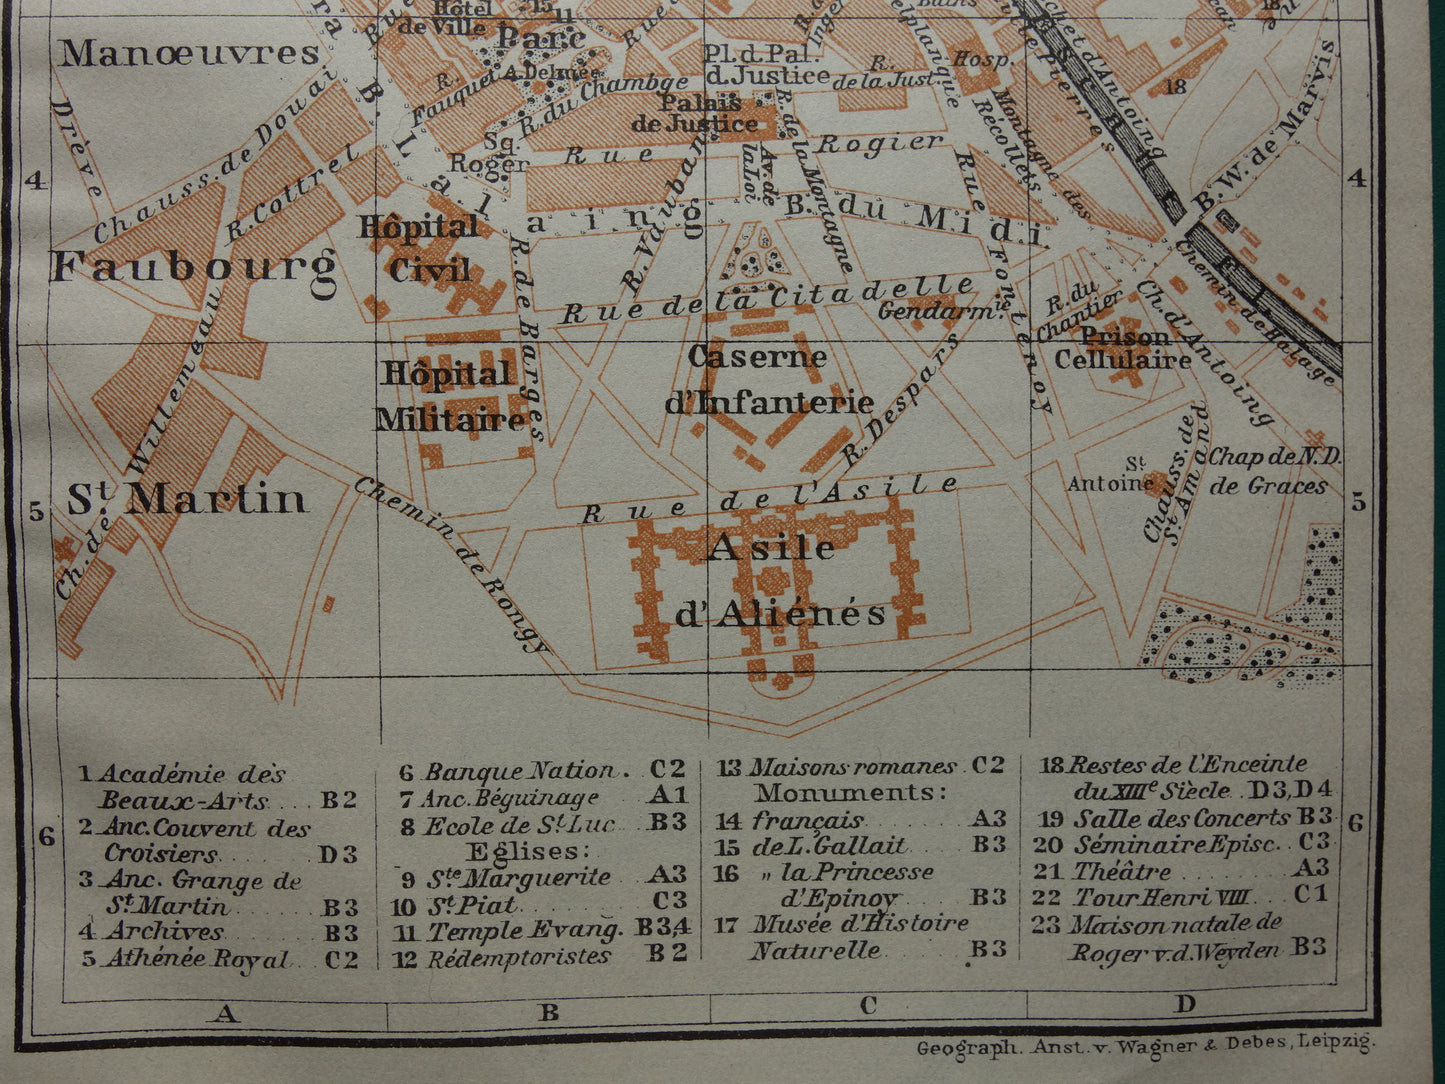 TOURNAI oude kaart van Doornik België uit 1914 kleine originele antieke plattegrond landkaart Tournai / Doornik